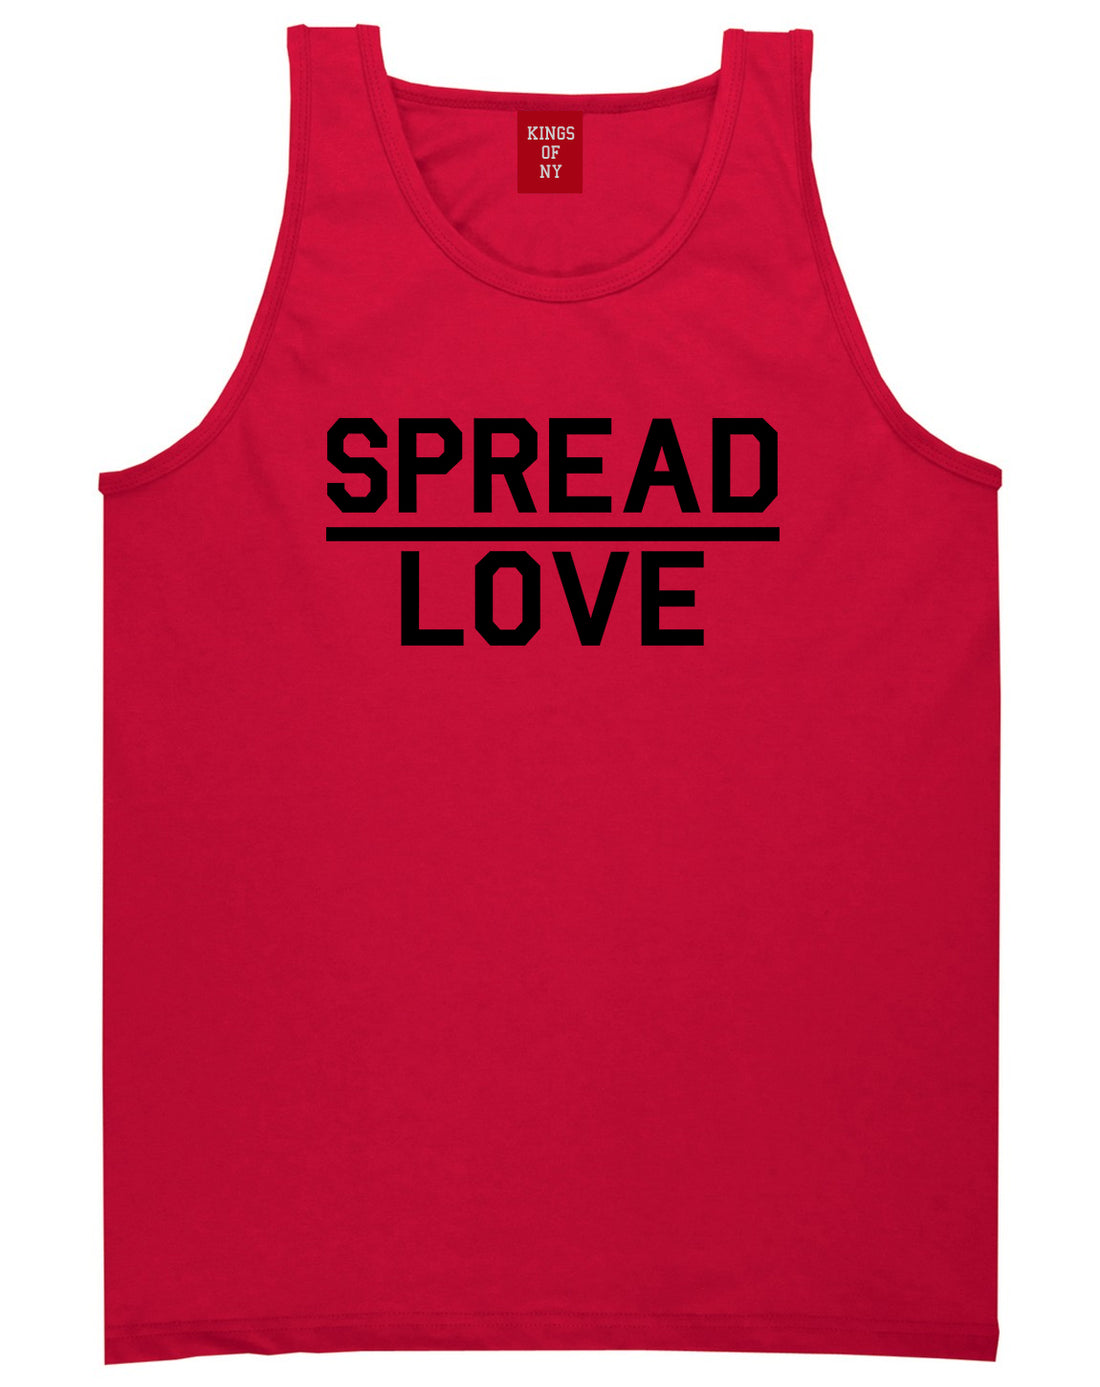 Spread Love Brooklyn Tank Top Shirt in Red